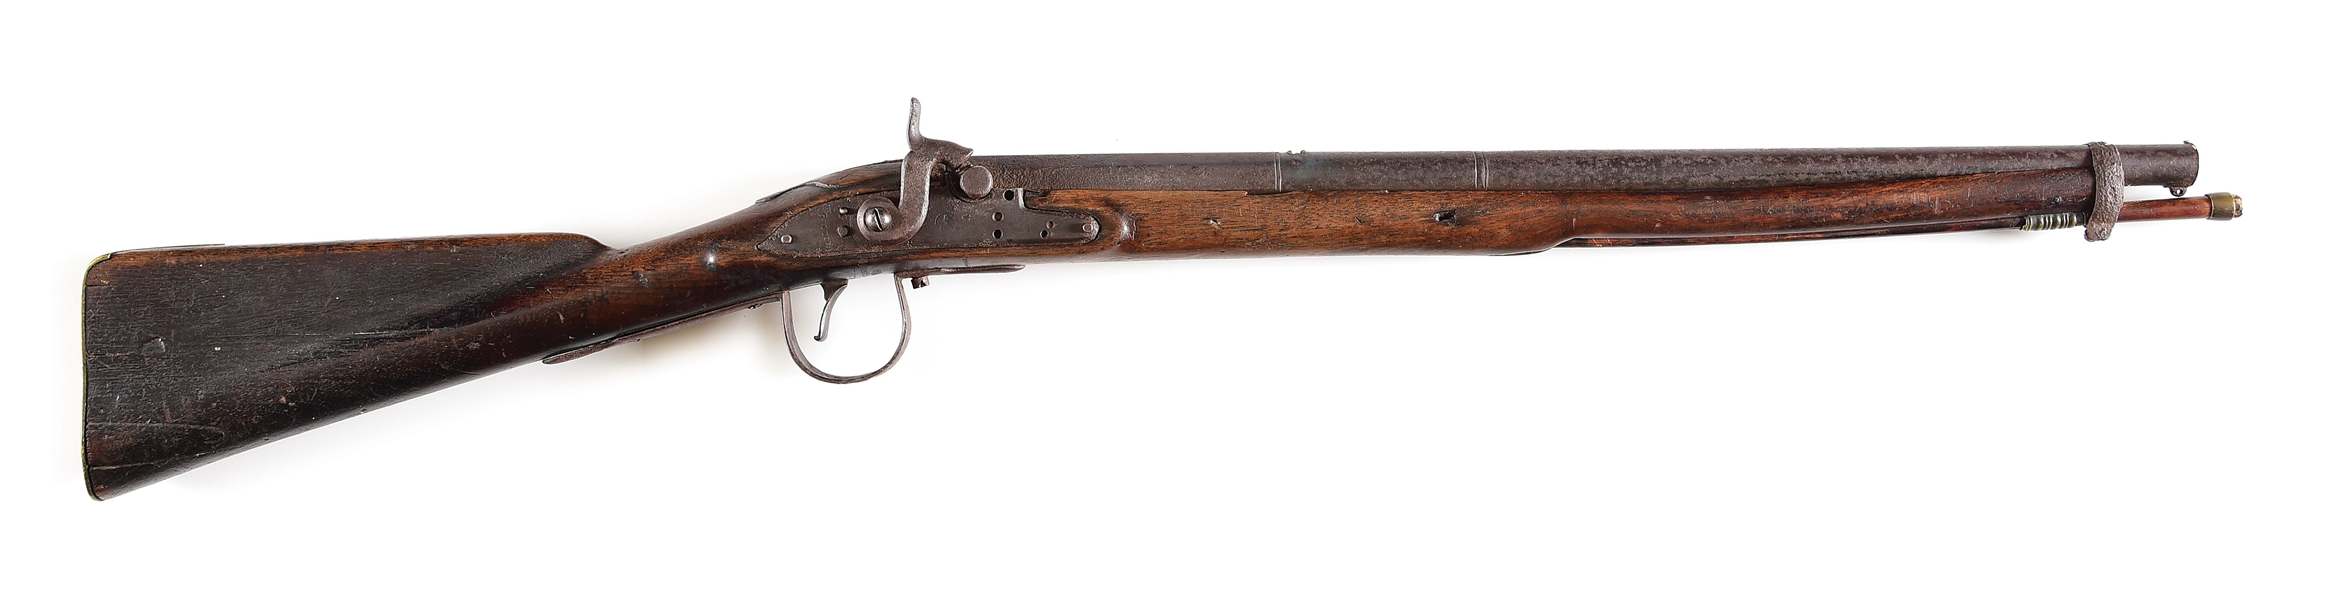 (A) EARLY 19TH CENTURY GALTON MARKED NORTHWEST TRADE GUN.